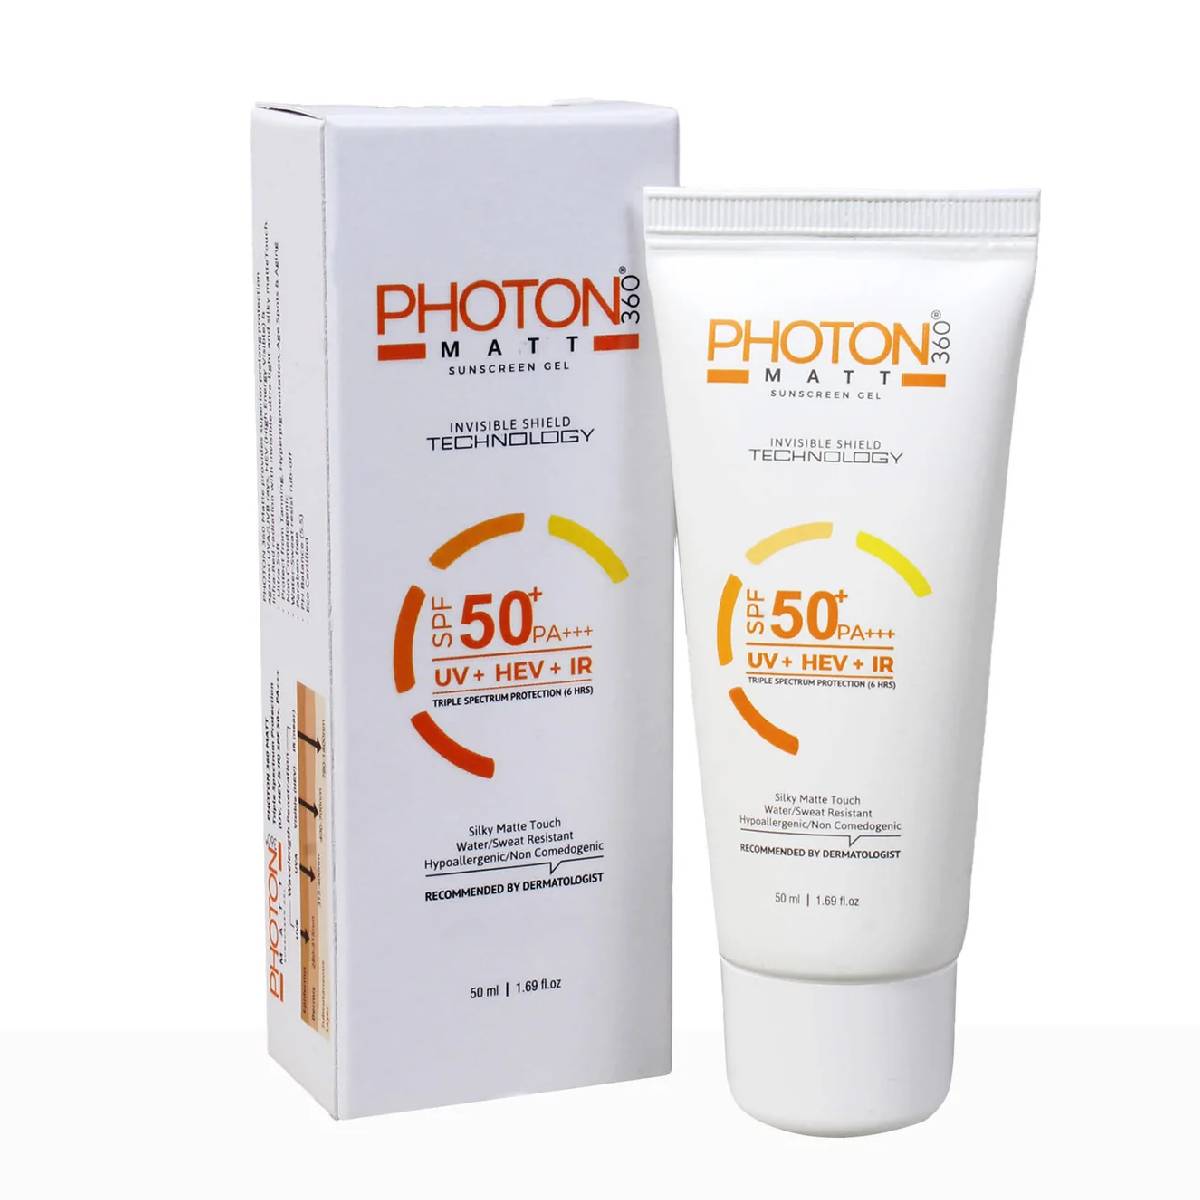 Photon 360 Matte Sunscreen Gel SPF 50+ PA+++